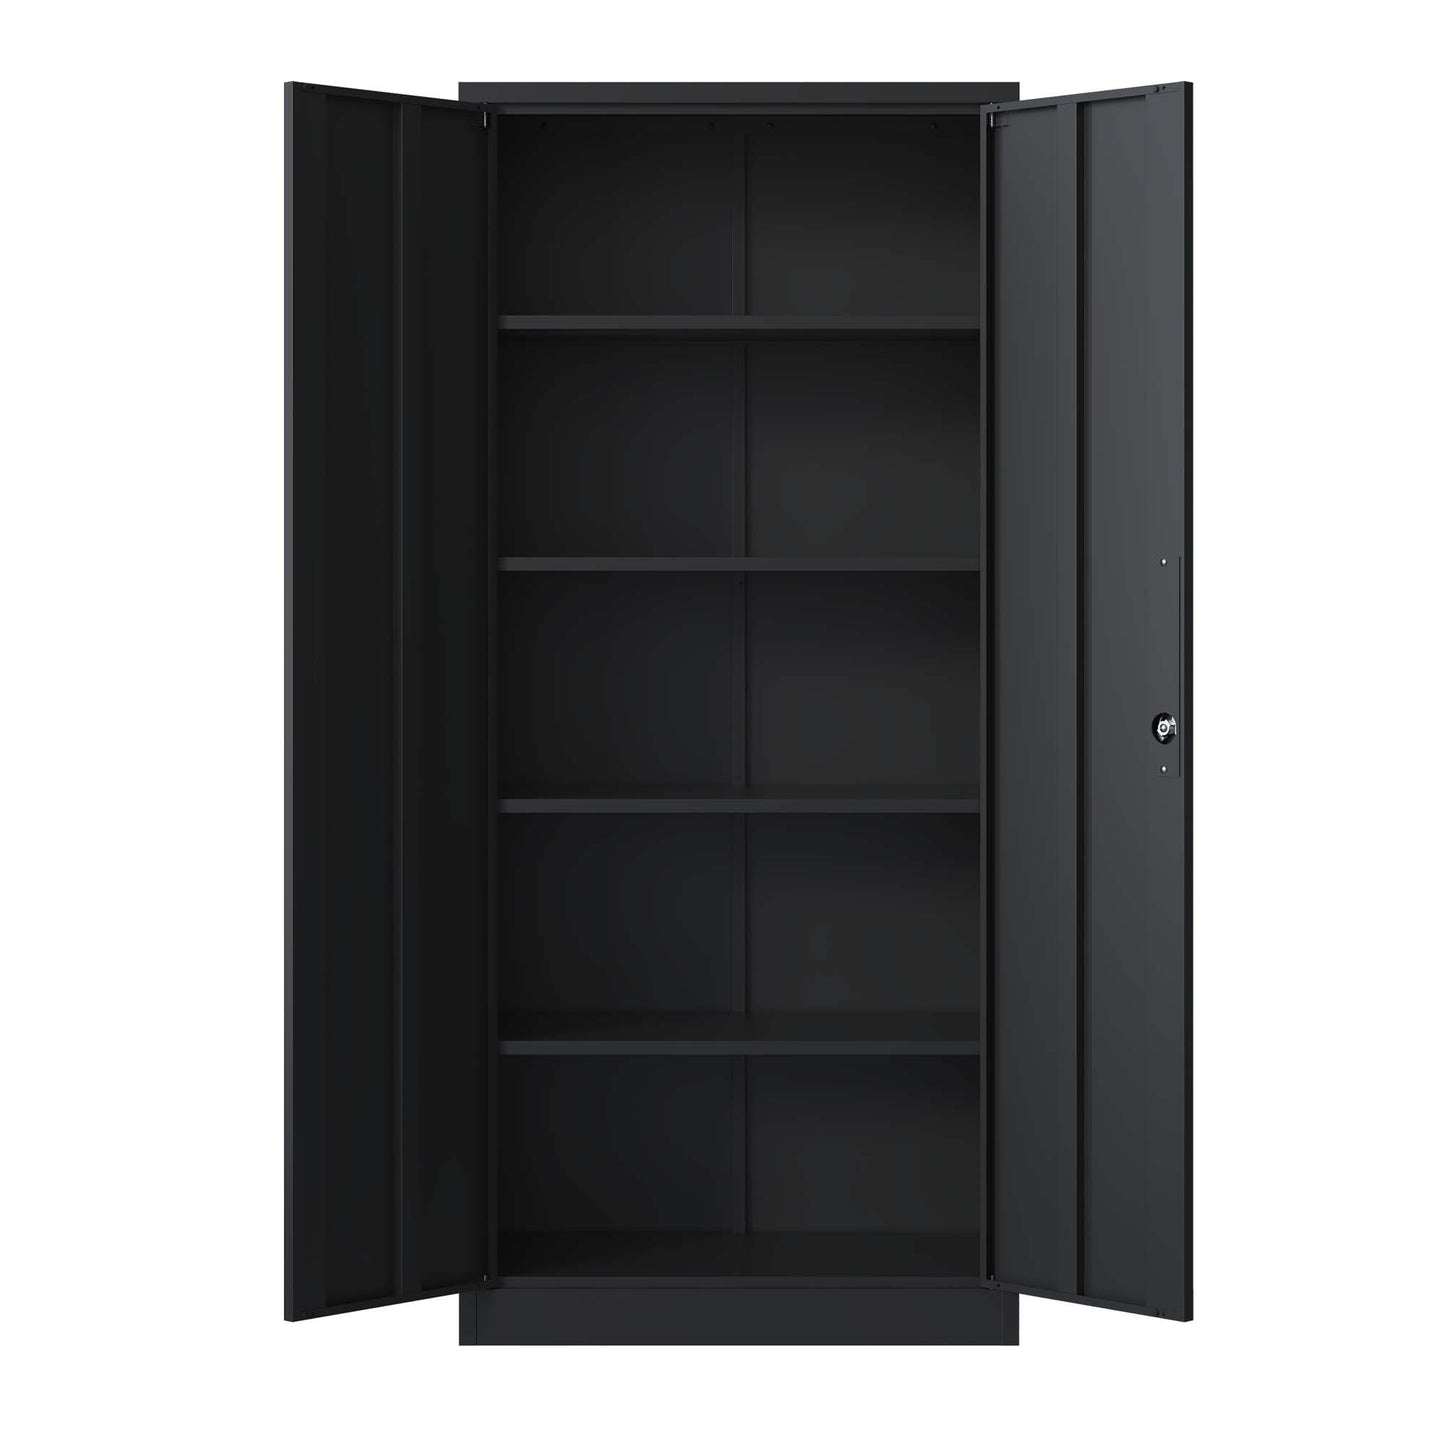 Metal Garage Storage Cabinet with Locking Doors and 4 Shelves